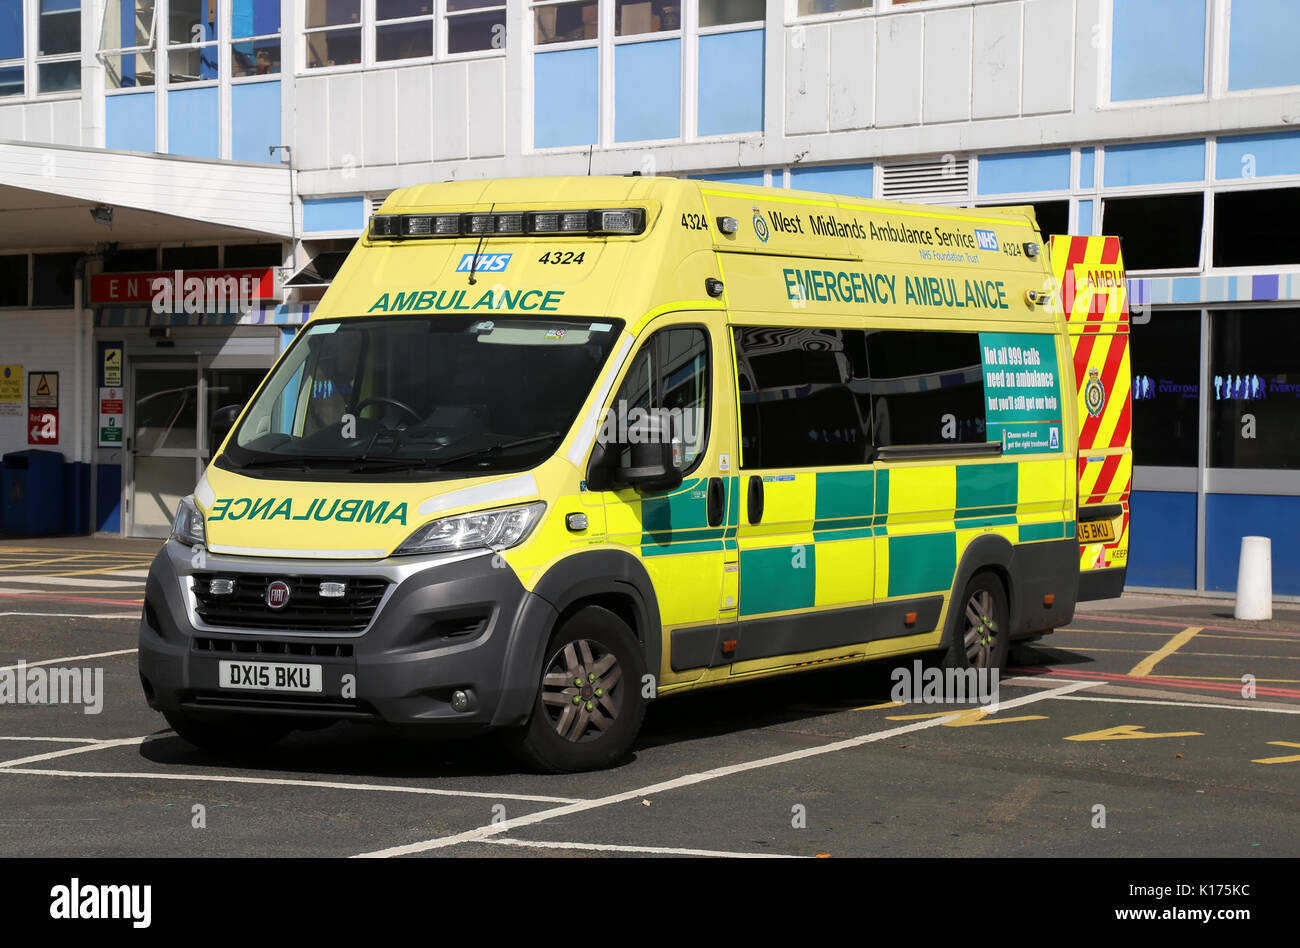 A Fiat emergency ambulance belonging to West Midlands Ambulance Service, seen in Birmingham, UK. Stock Photo